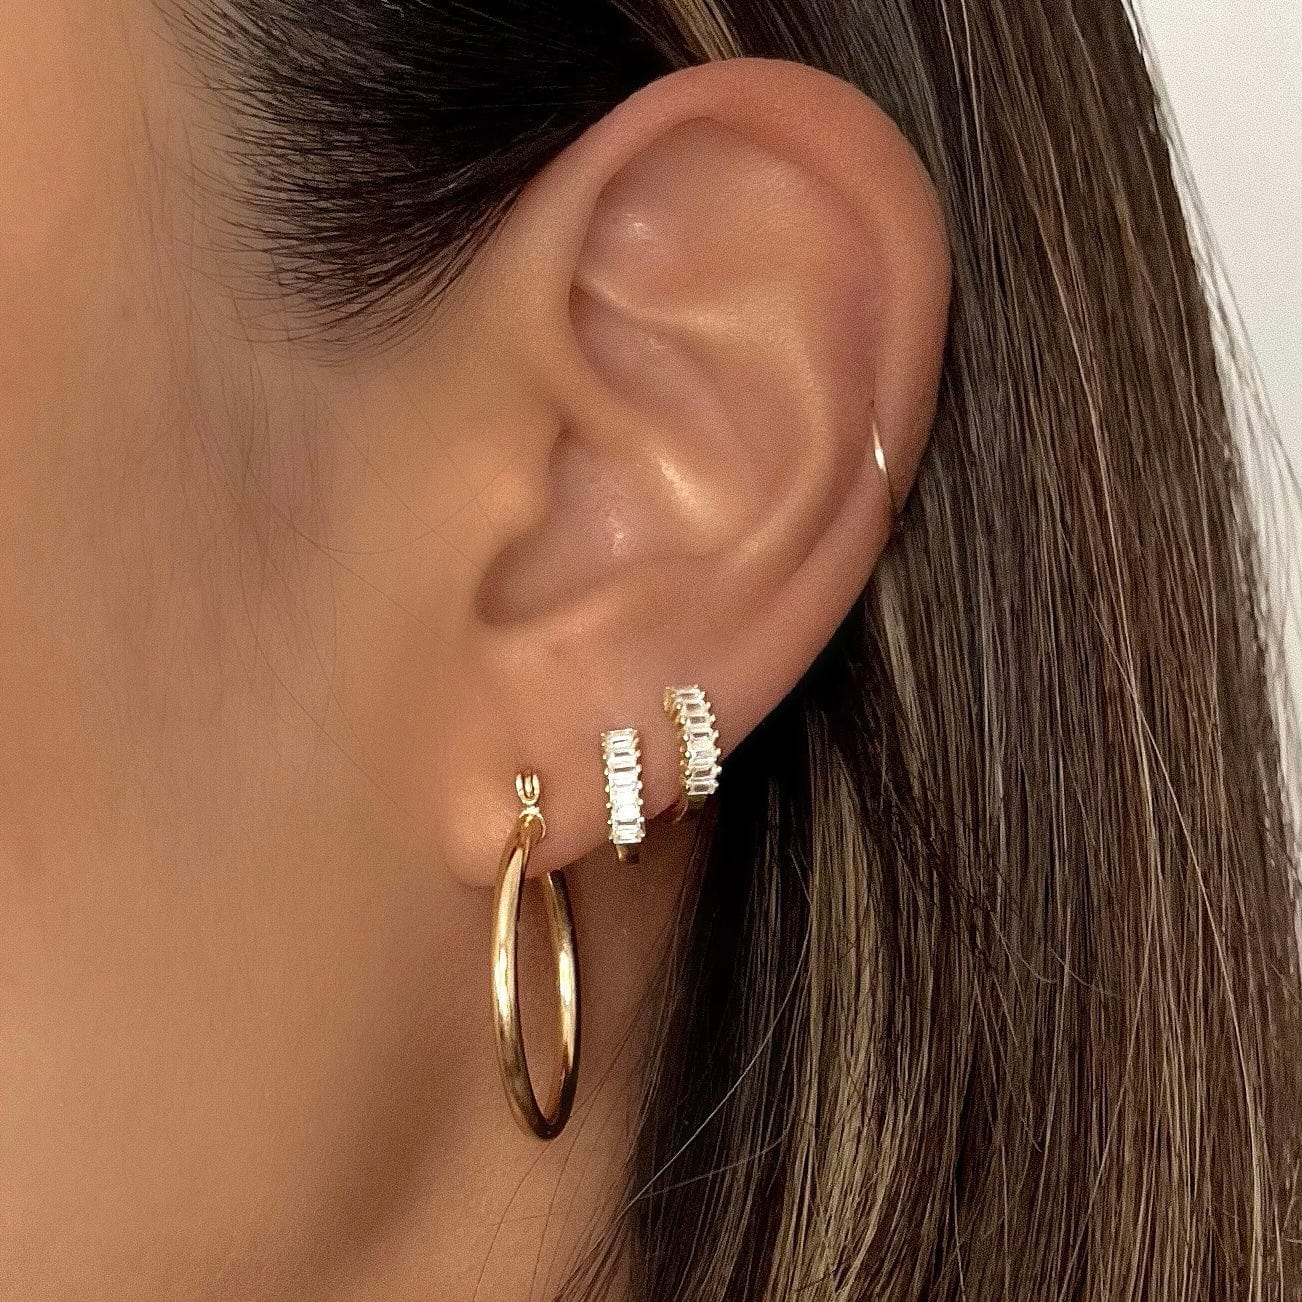 LE sensor earrings Medium 24mm Mabel Hoops